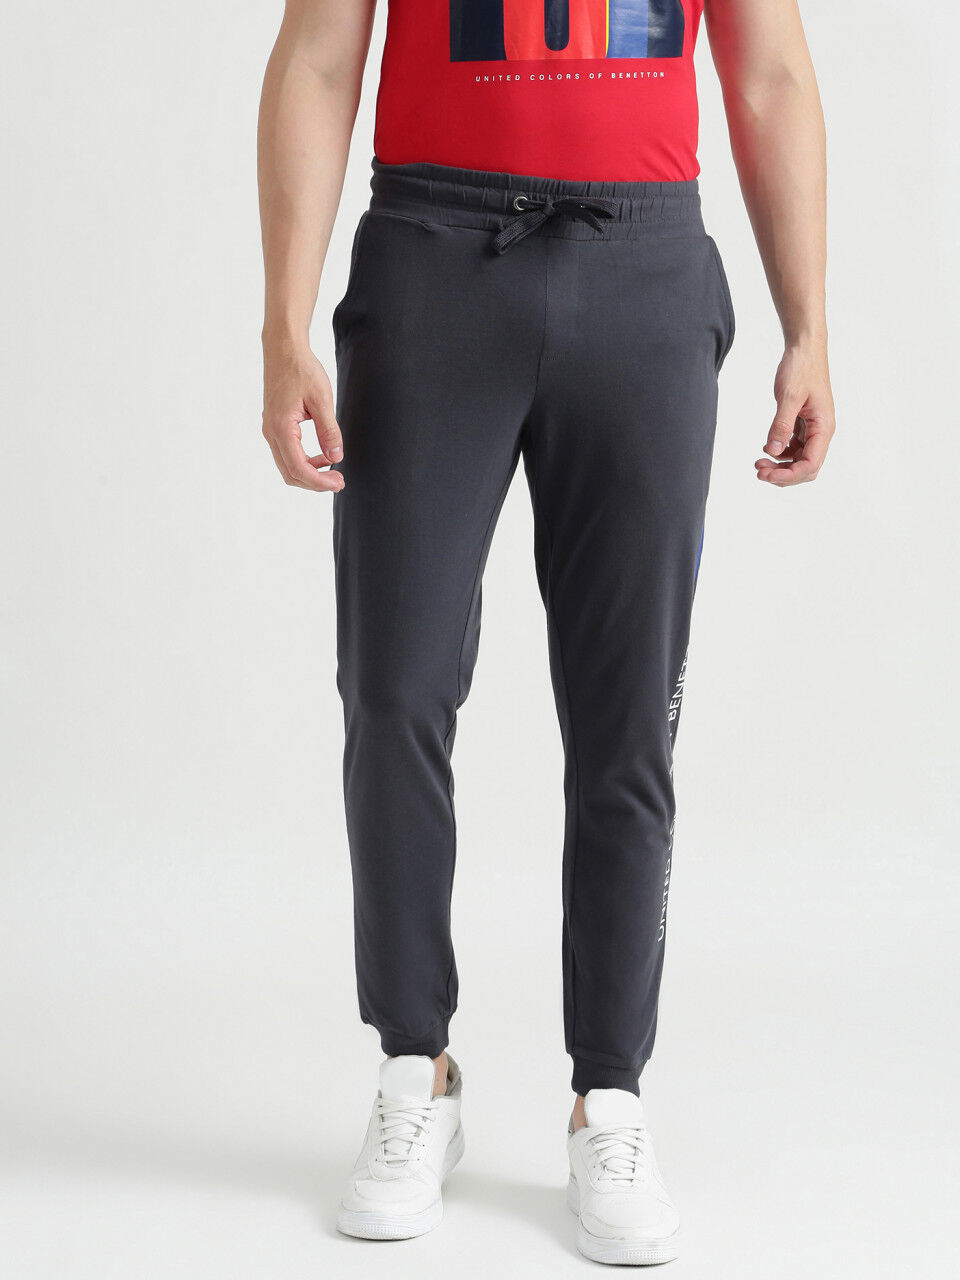 Men's Knit Pants New Collection 2021 | Benetton